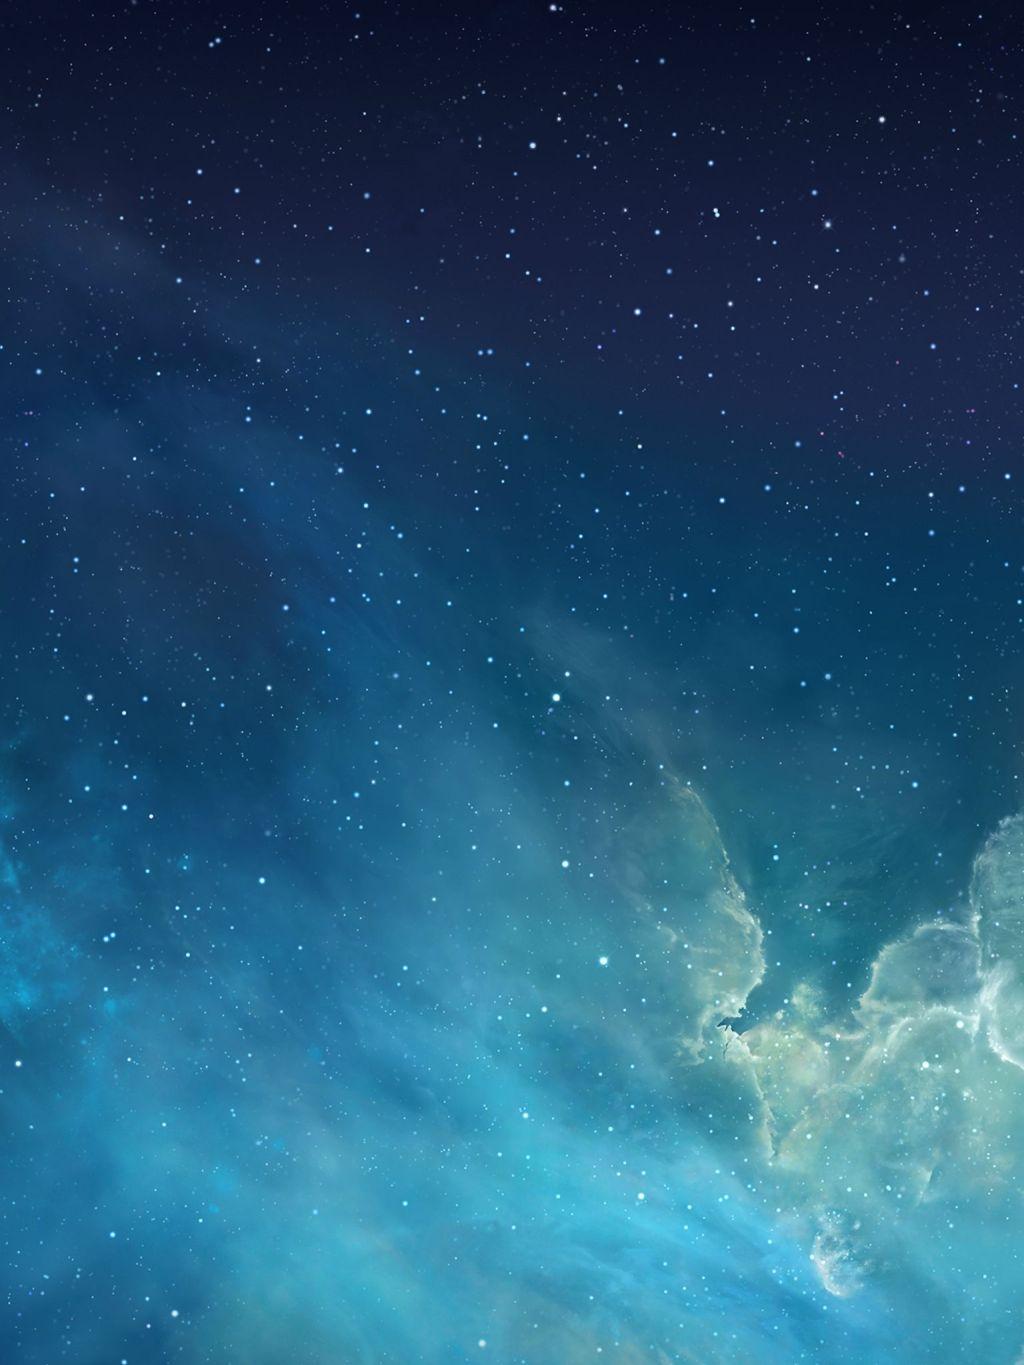 Download iOS 7 starry wallpaper [1536x2048] Iwallpaper Wallpaper